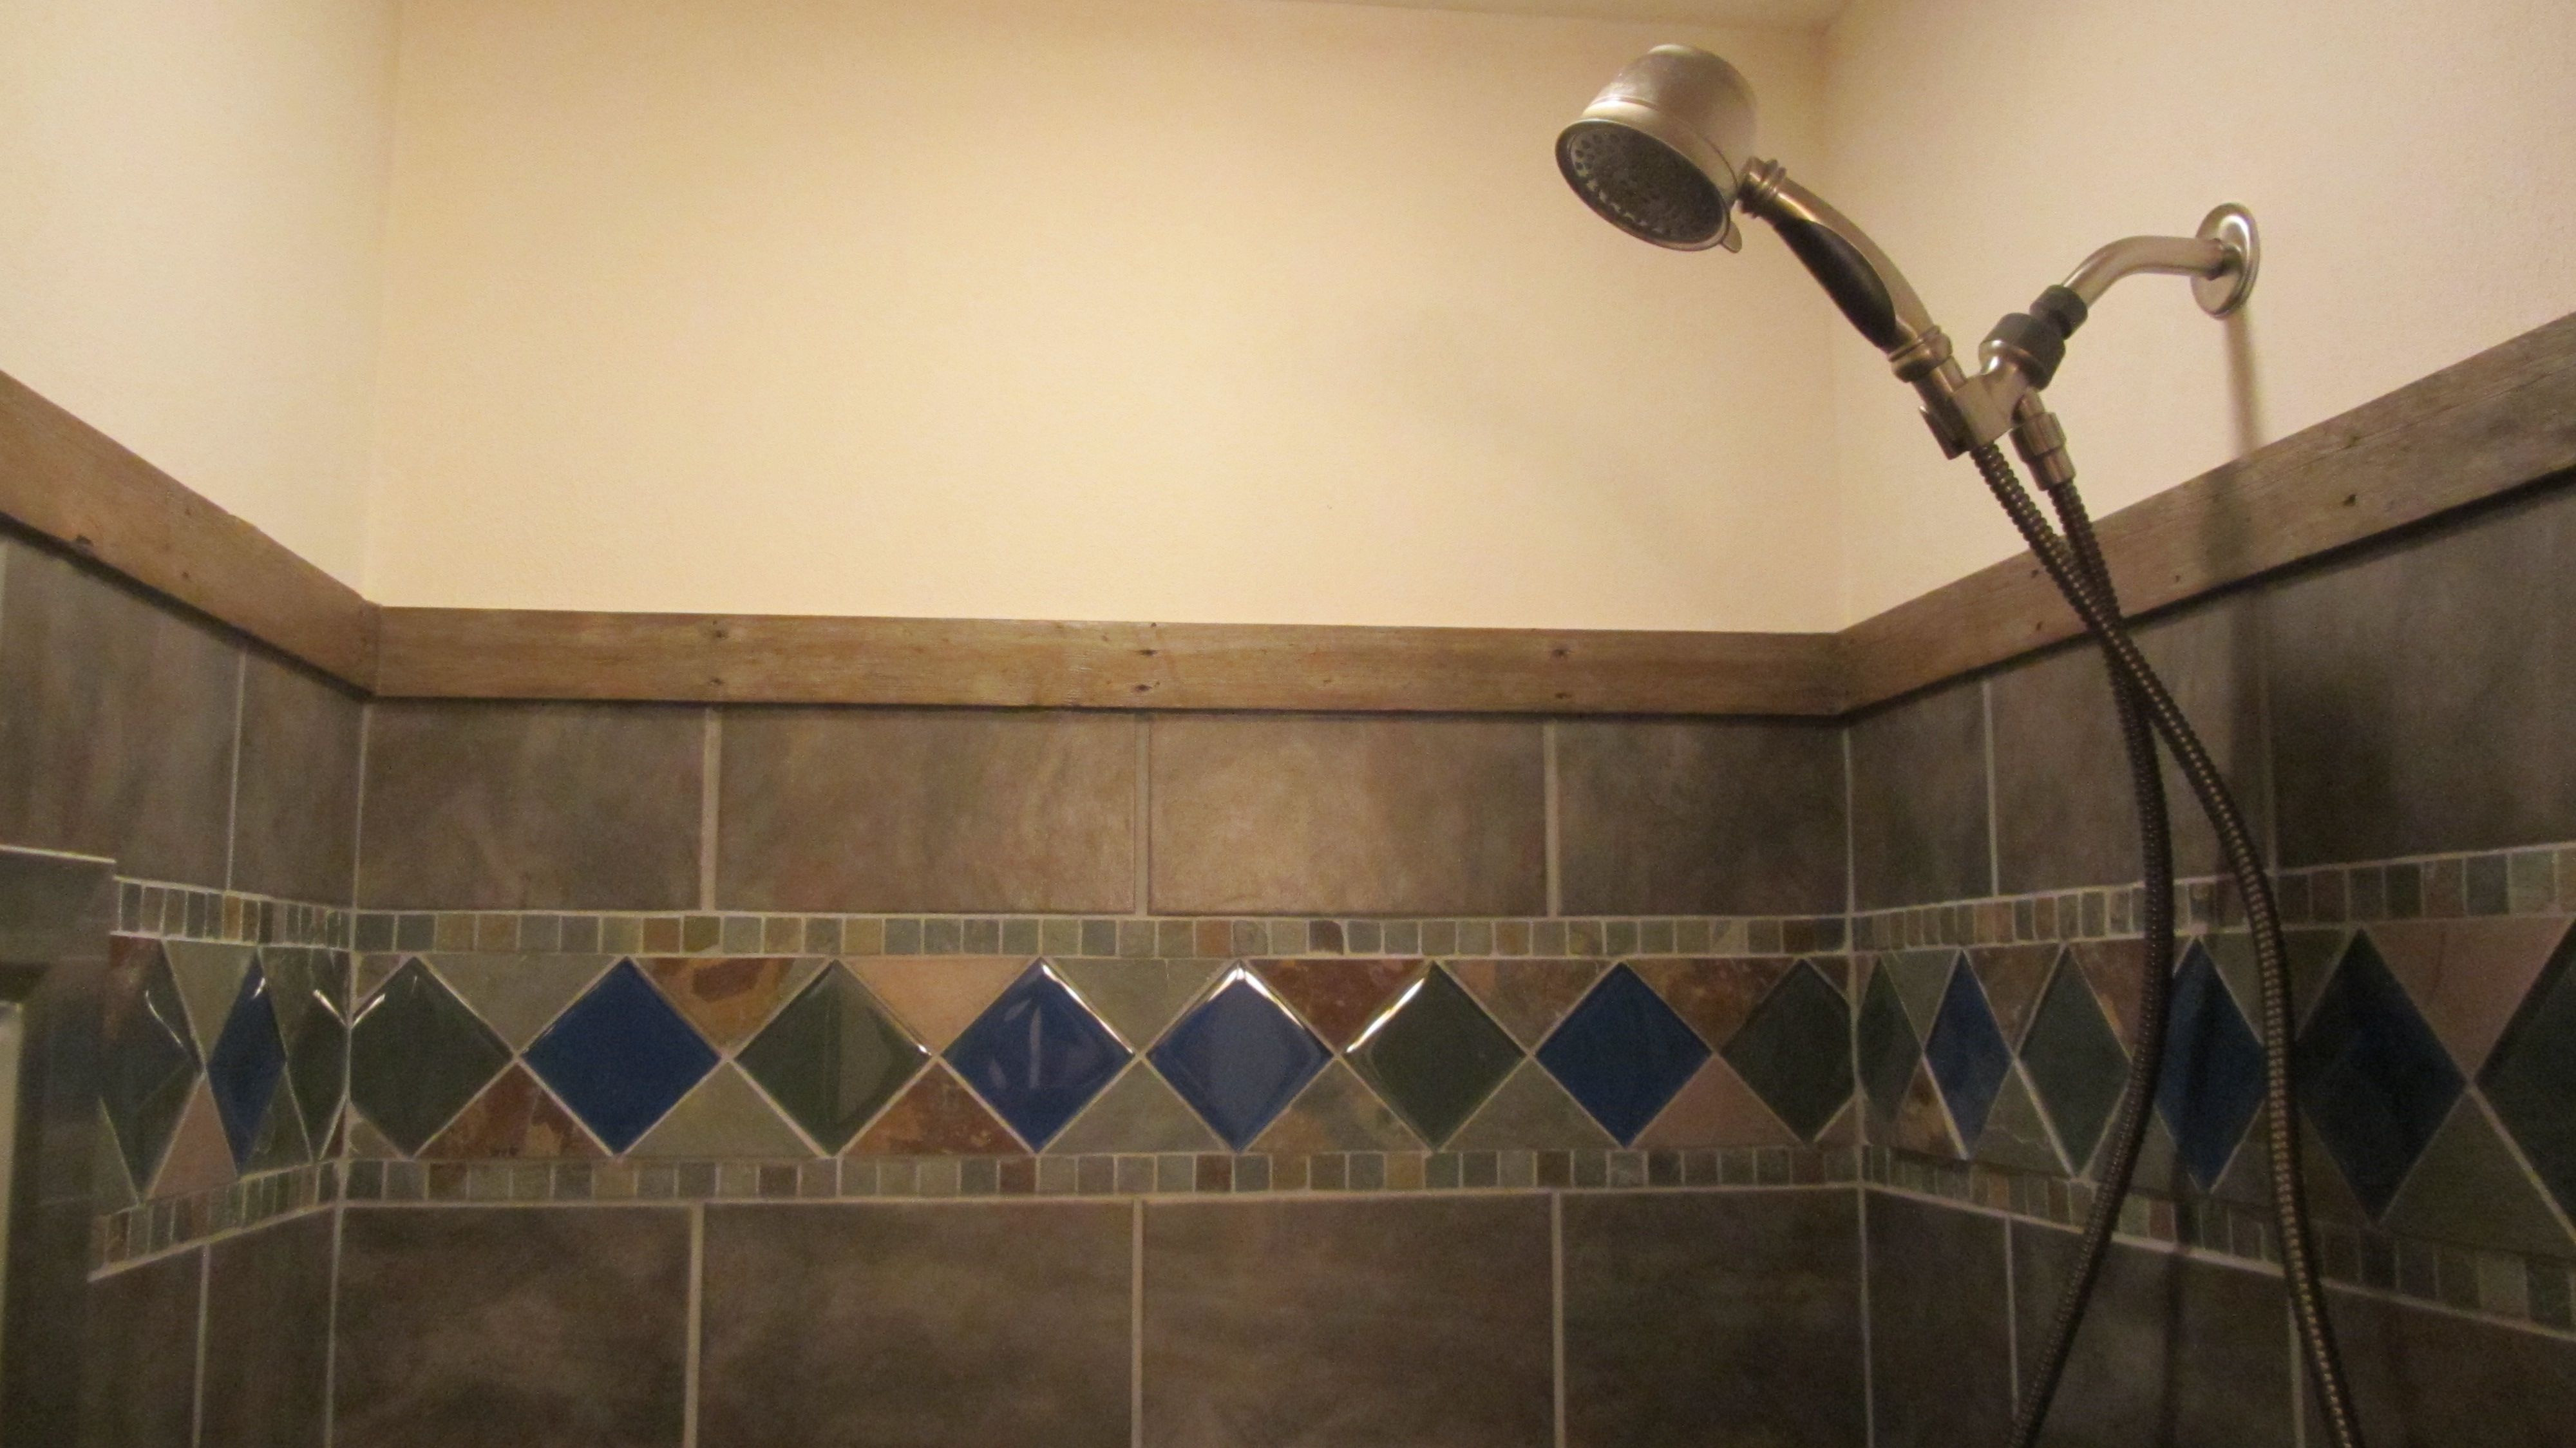 Best ideas about DIY Shower Tile
. Save or Pin DIY Shower Tile Now.